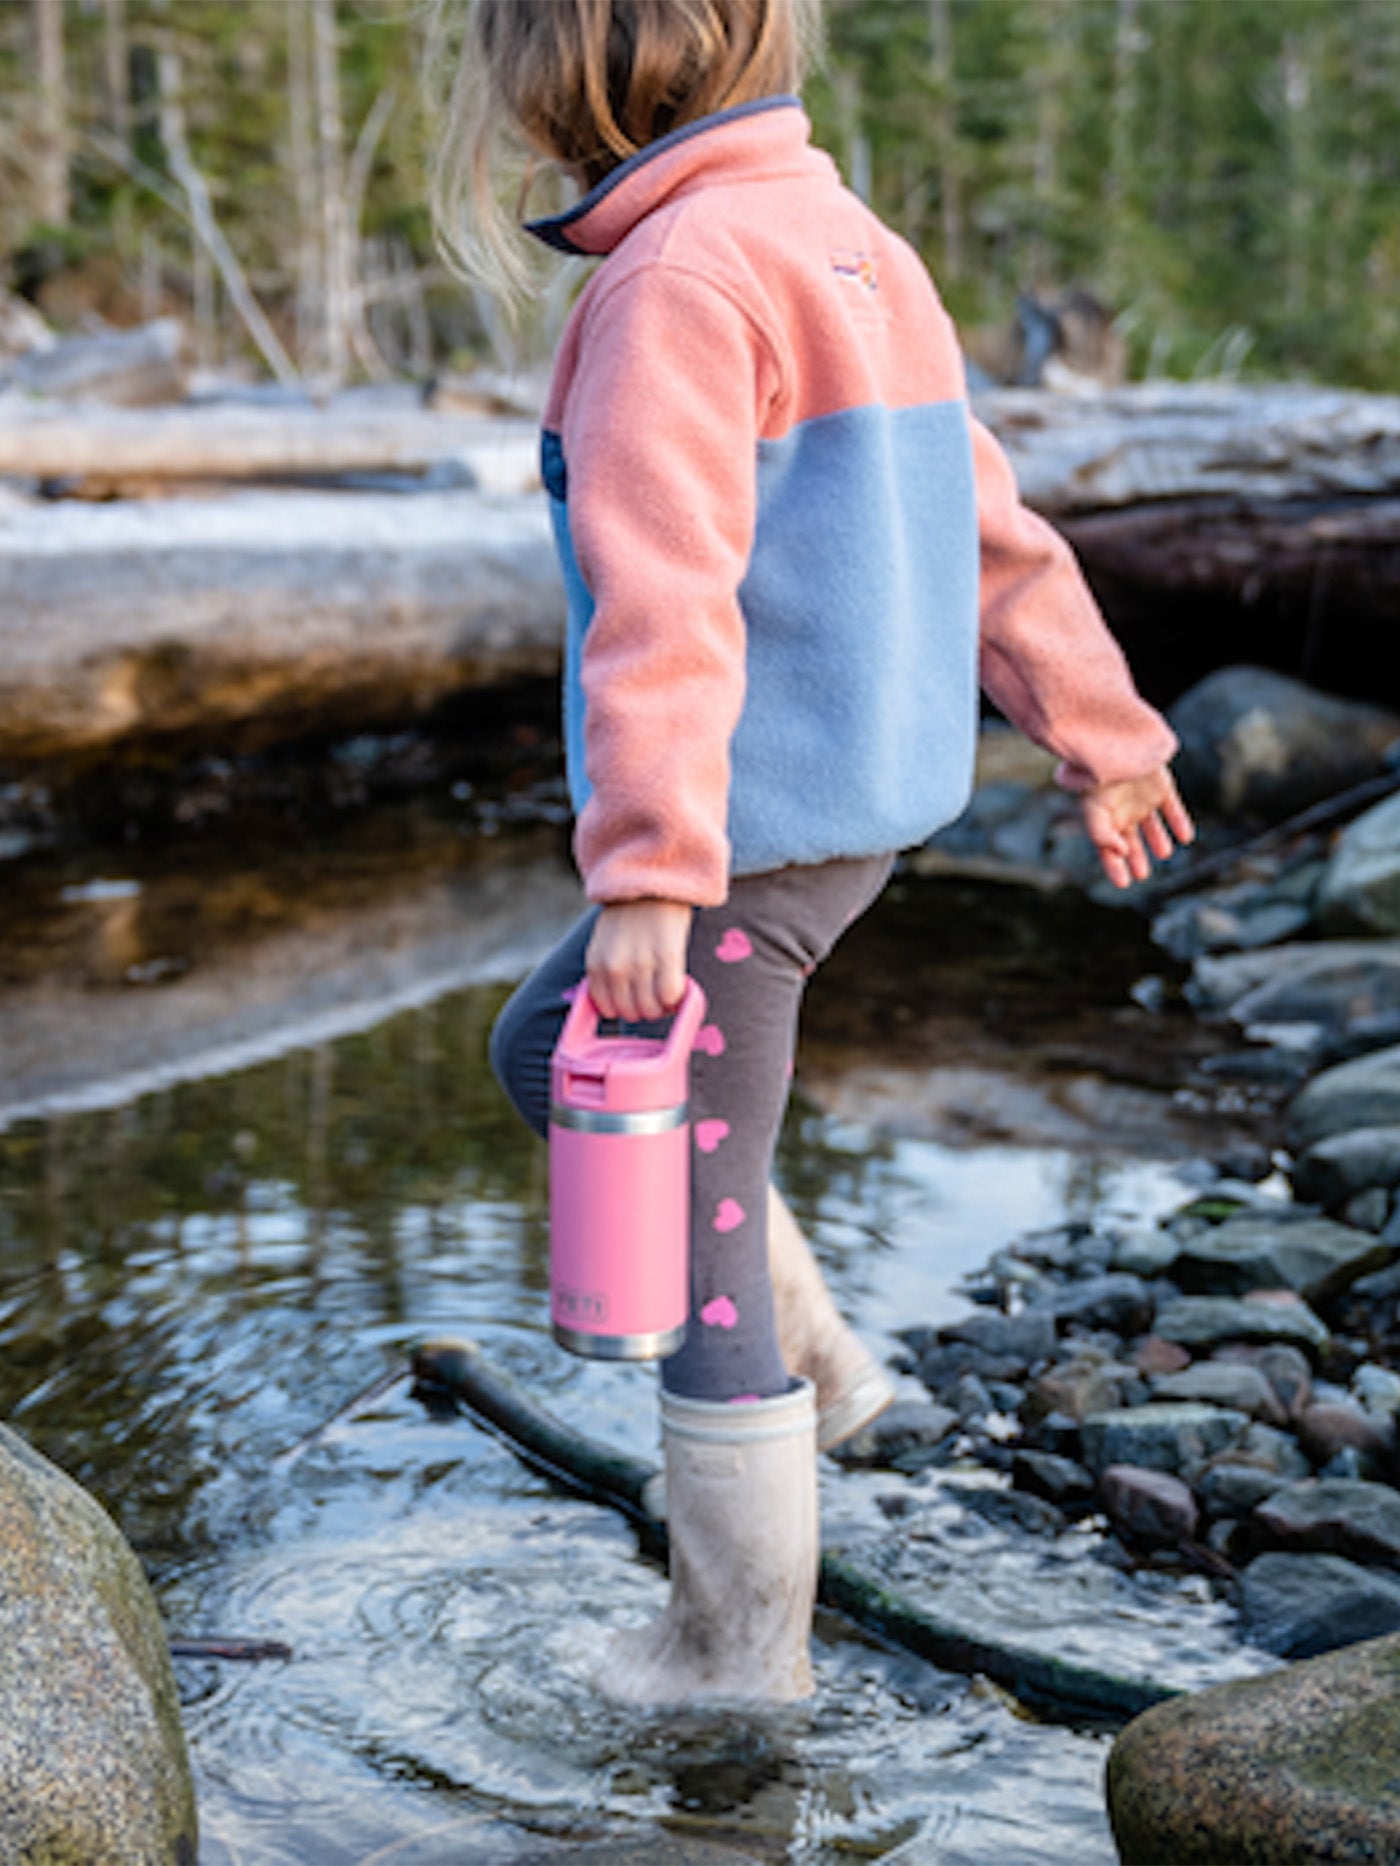 YETI Rambler Jr 12 oz Kids Bottle - Harbor Pink - Backcountry & Beyond